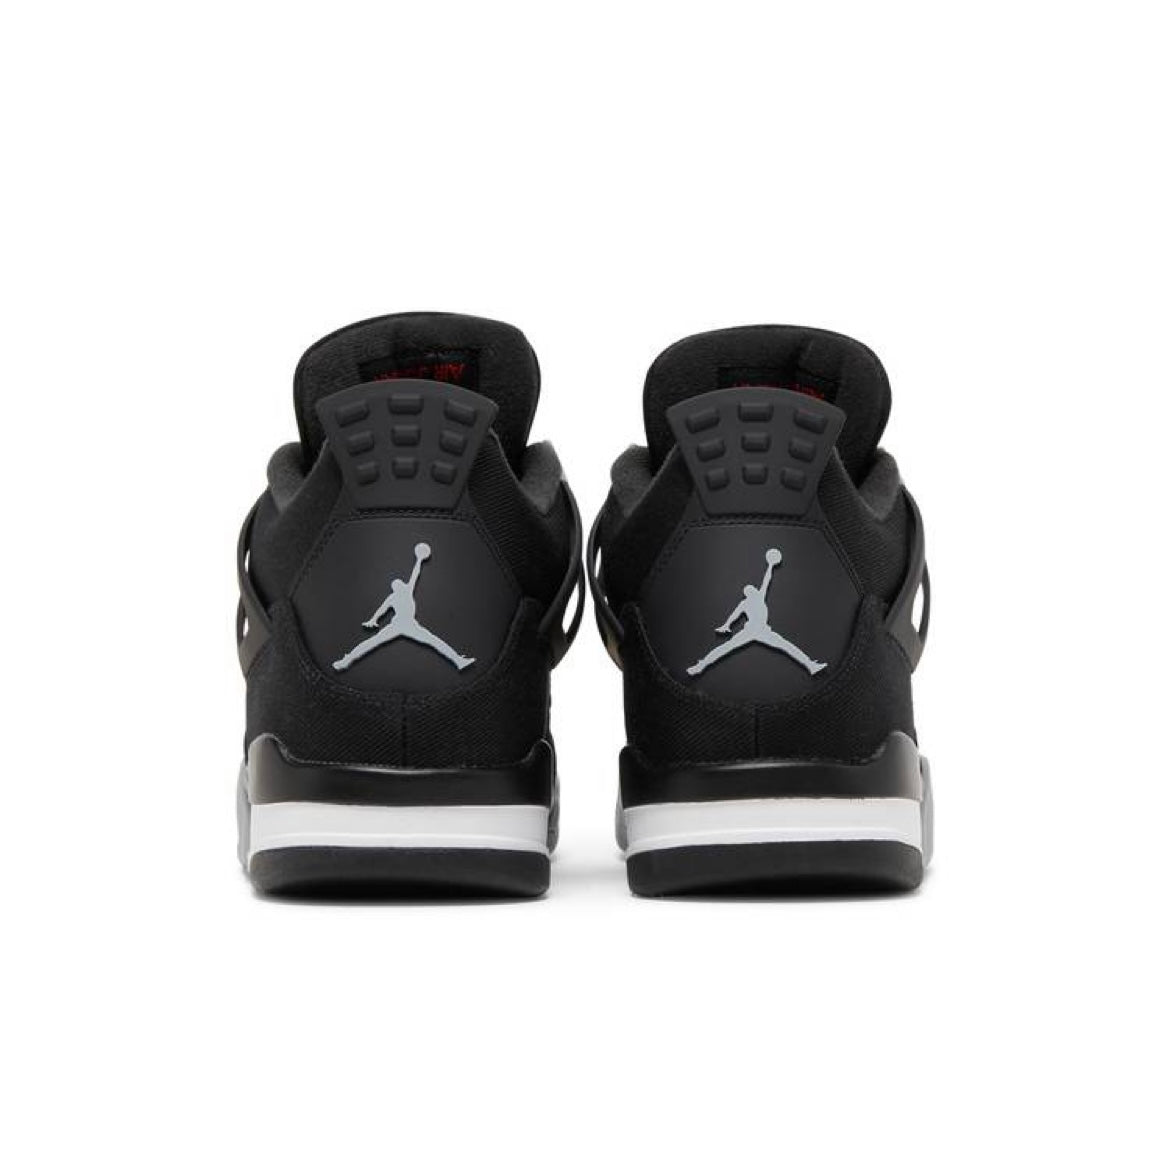 Air Jordan 4 Retro "Black Canvas"